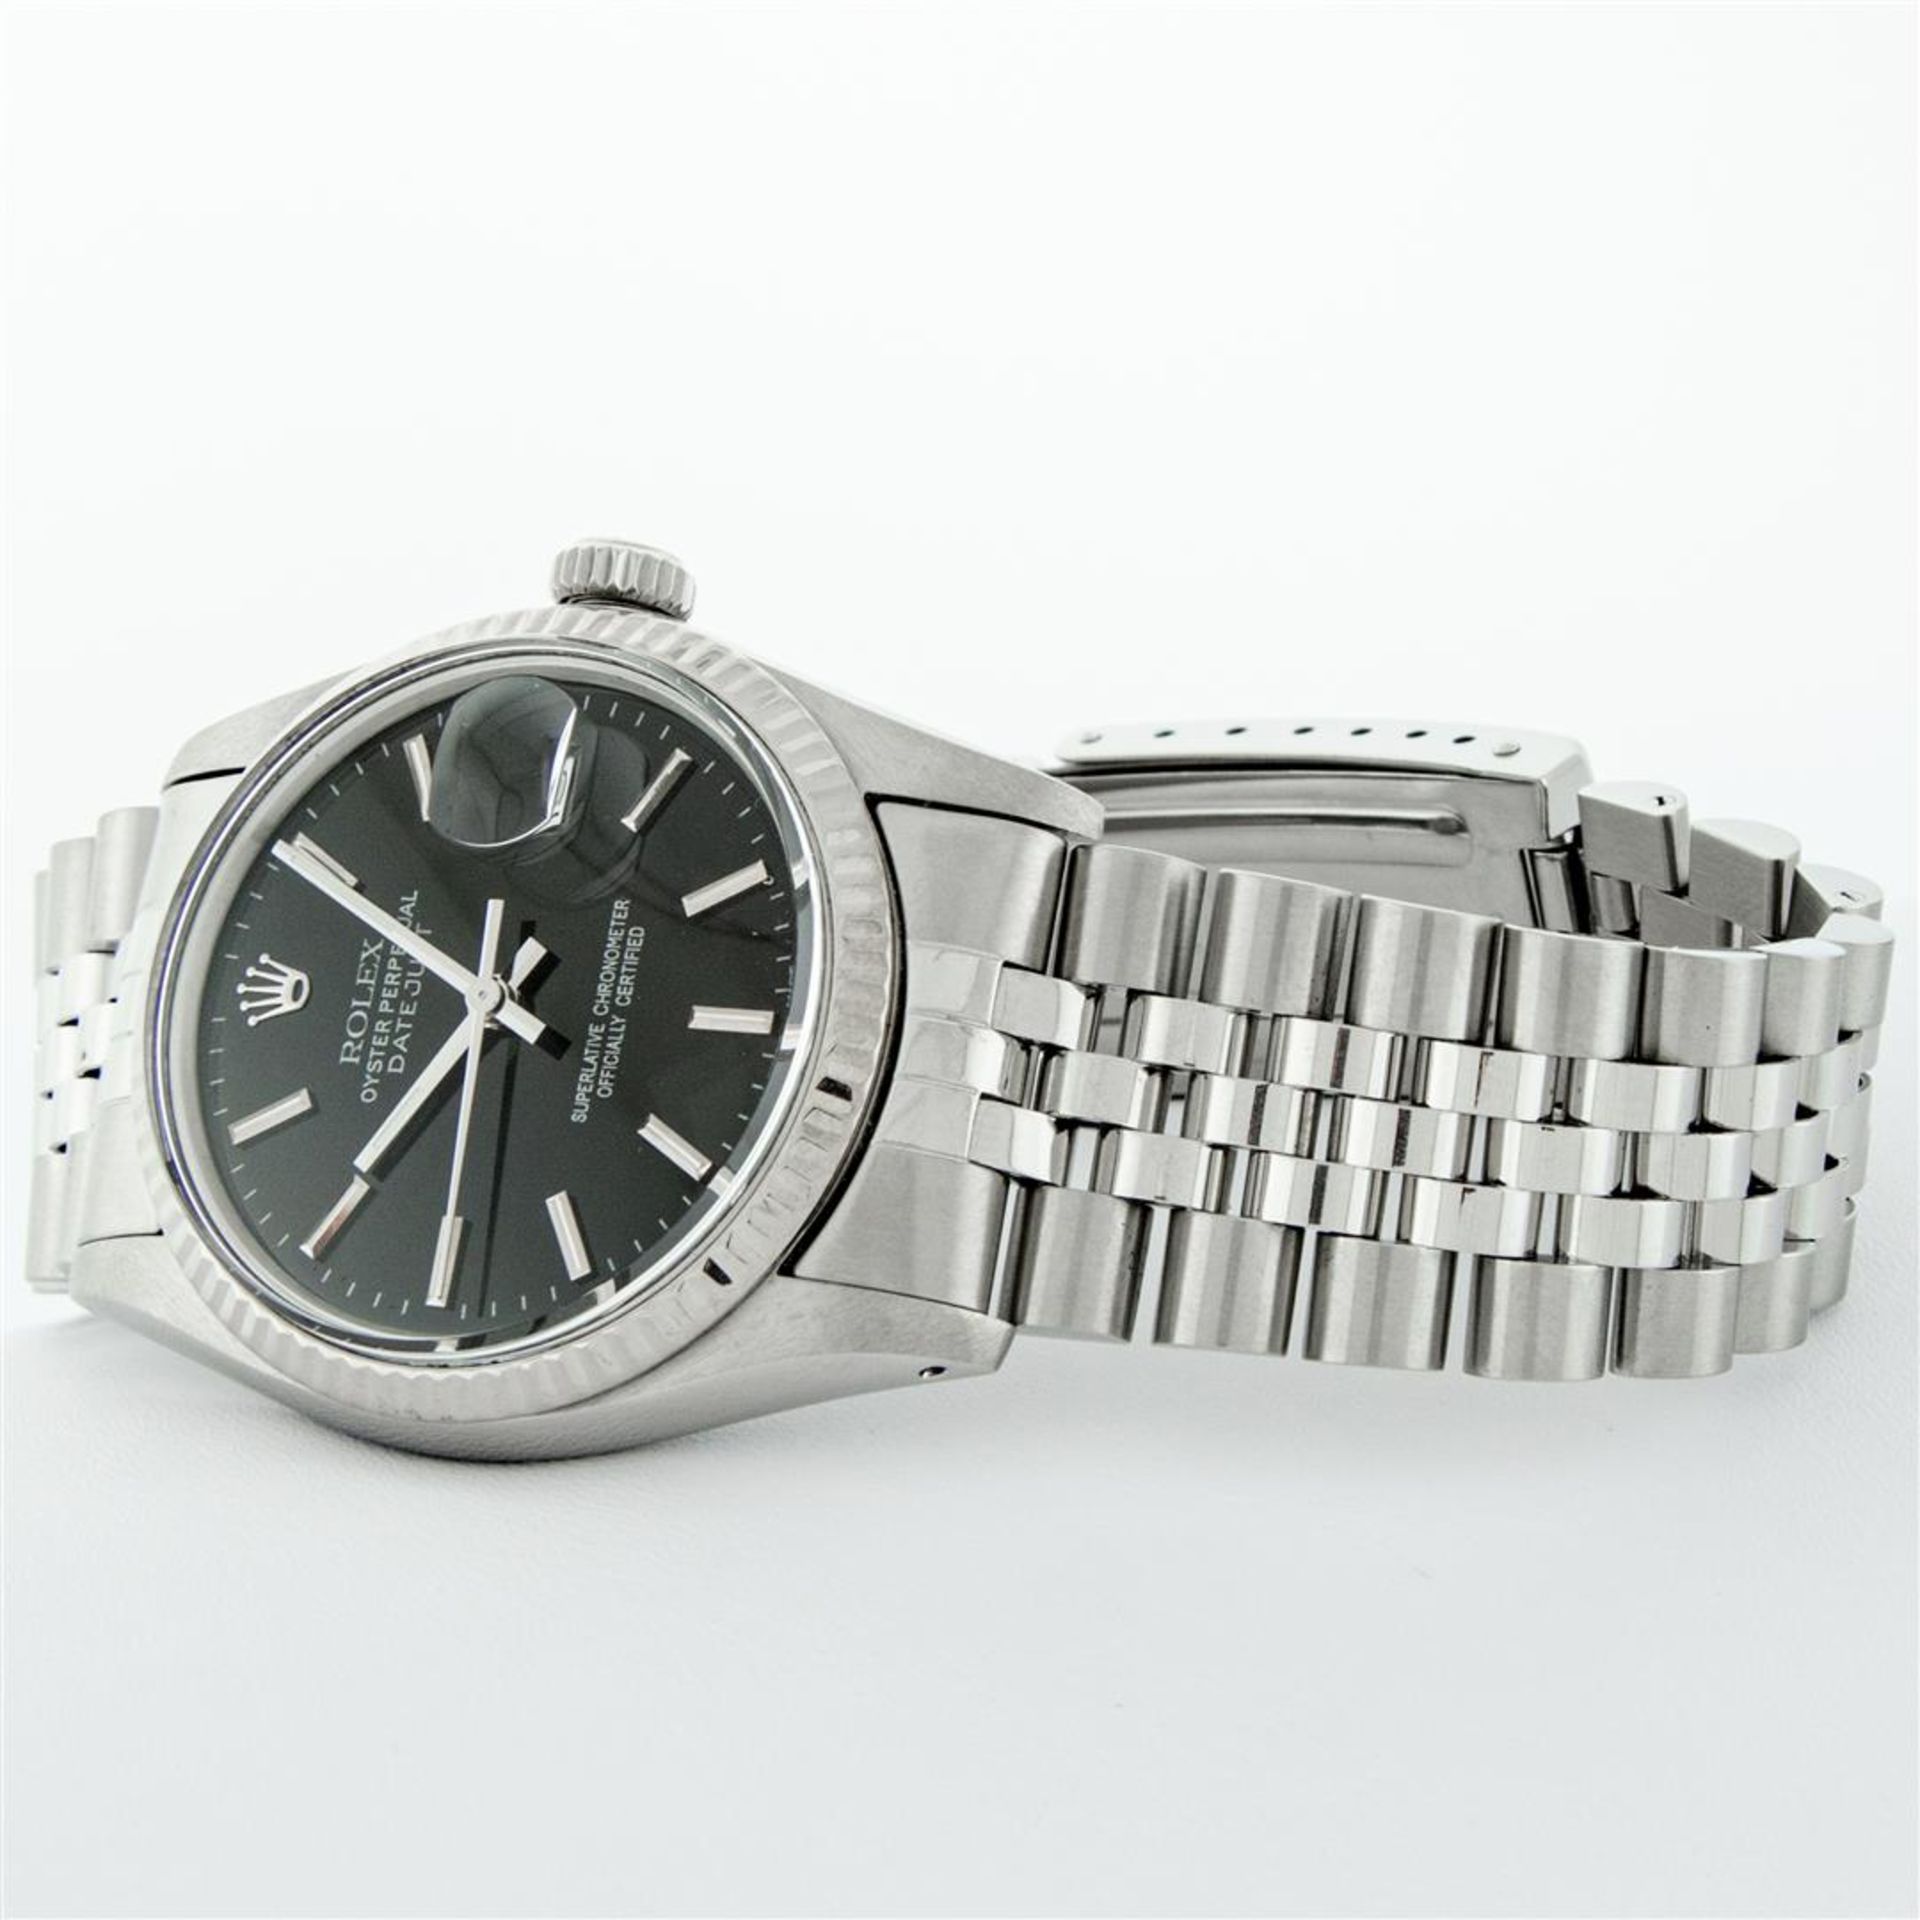 Rolex Mens Stainless Steel Black Index 36mm Datejust Wristwatch - Image 4 of 9